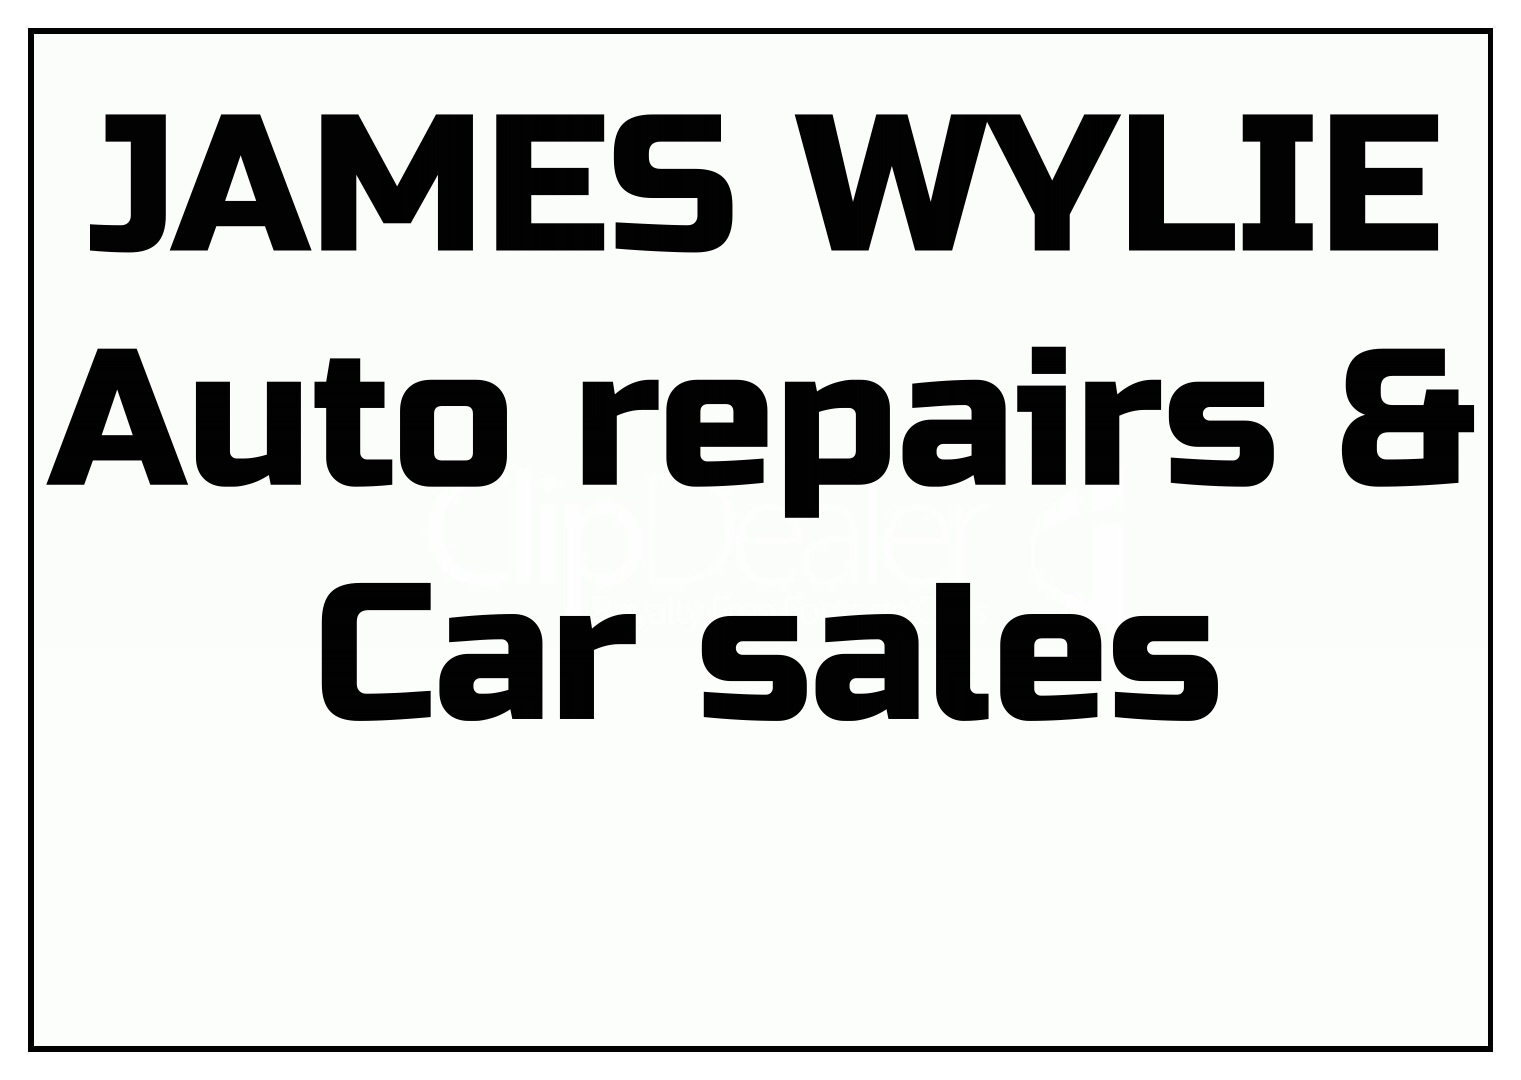 James Wylie Automobile Repairs - Euro Repar logo